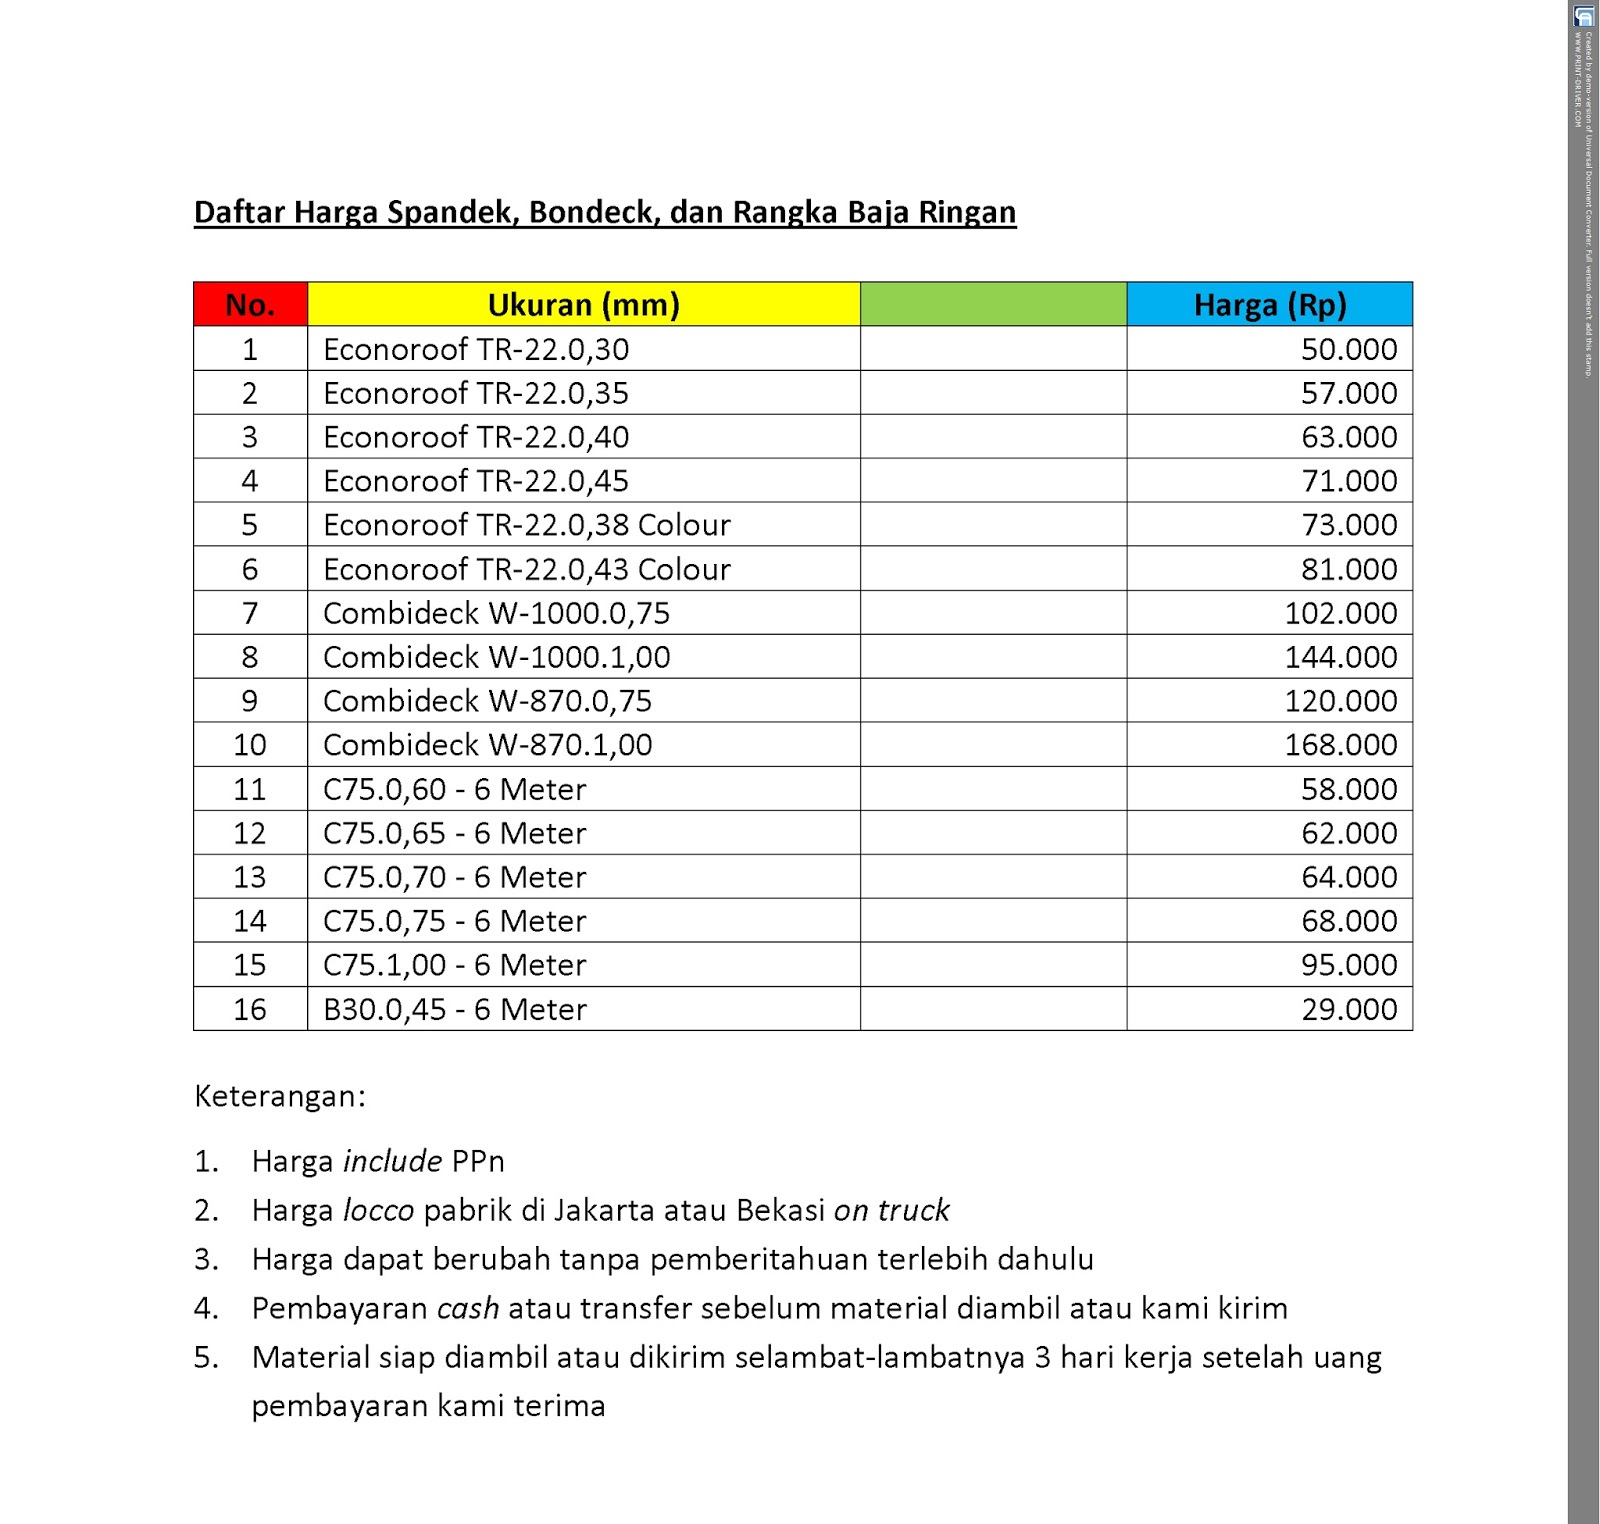  Daftar Harga Spandek Bondek dan Rangka Baja Ringan 2020 